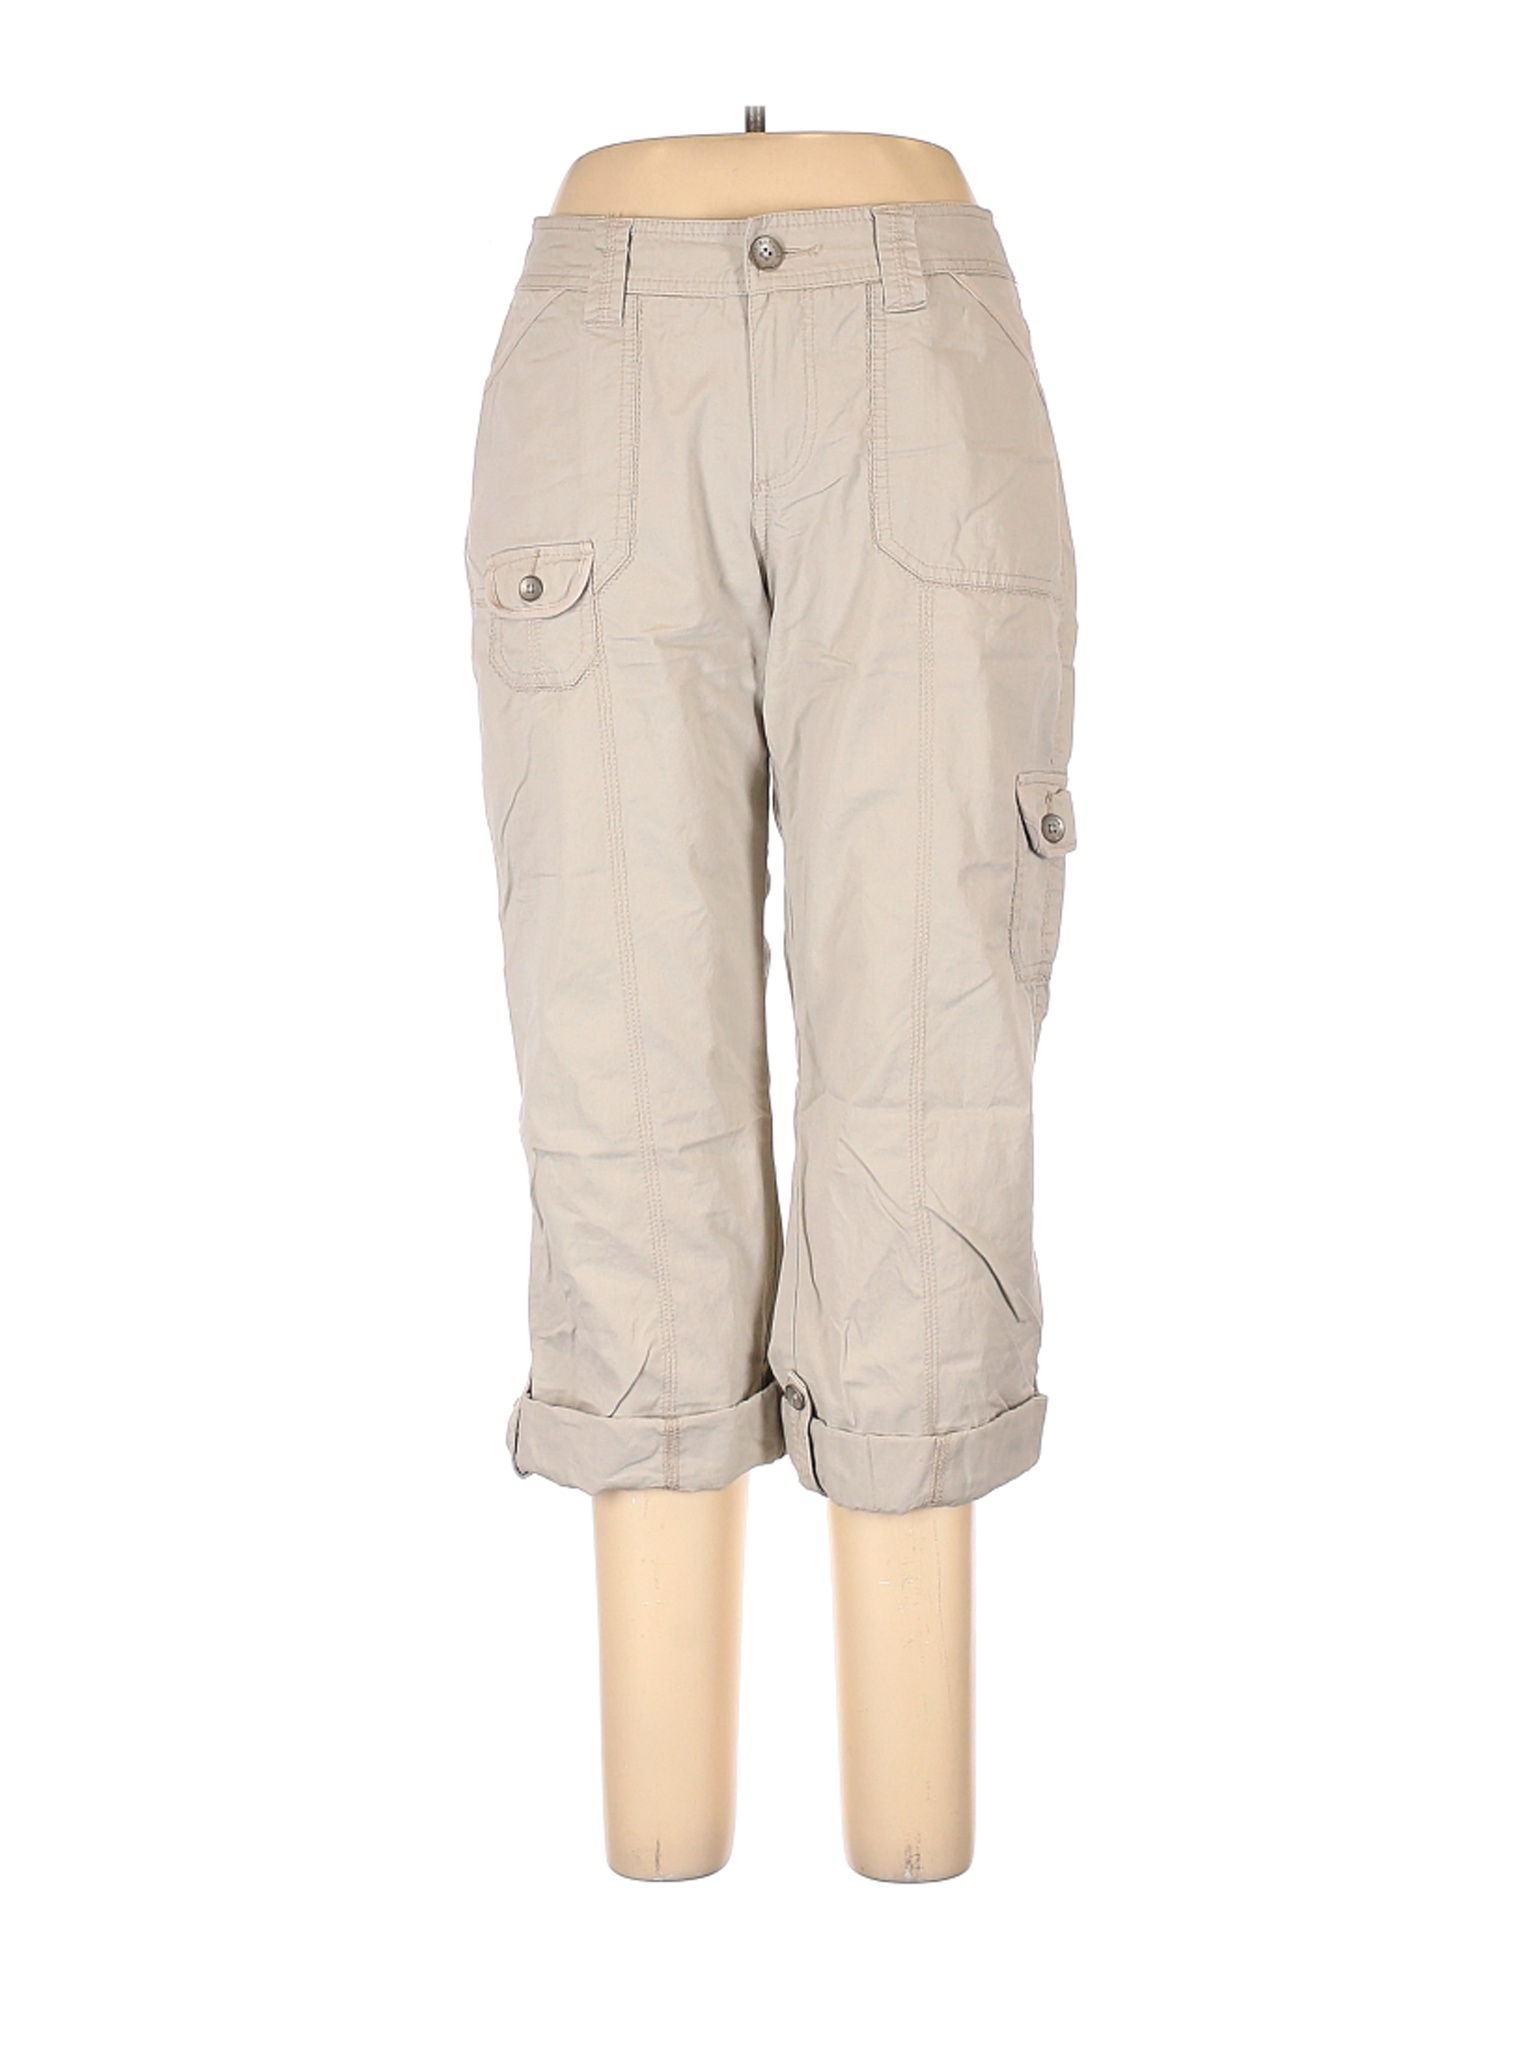 SONOMA life + style Women Brown Cargo Pants 10 | eBay